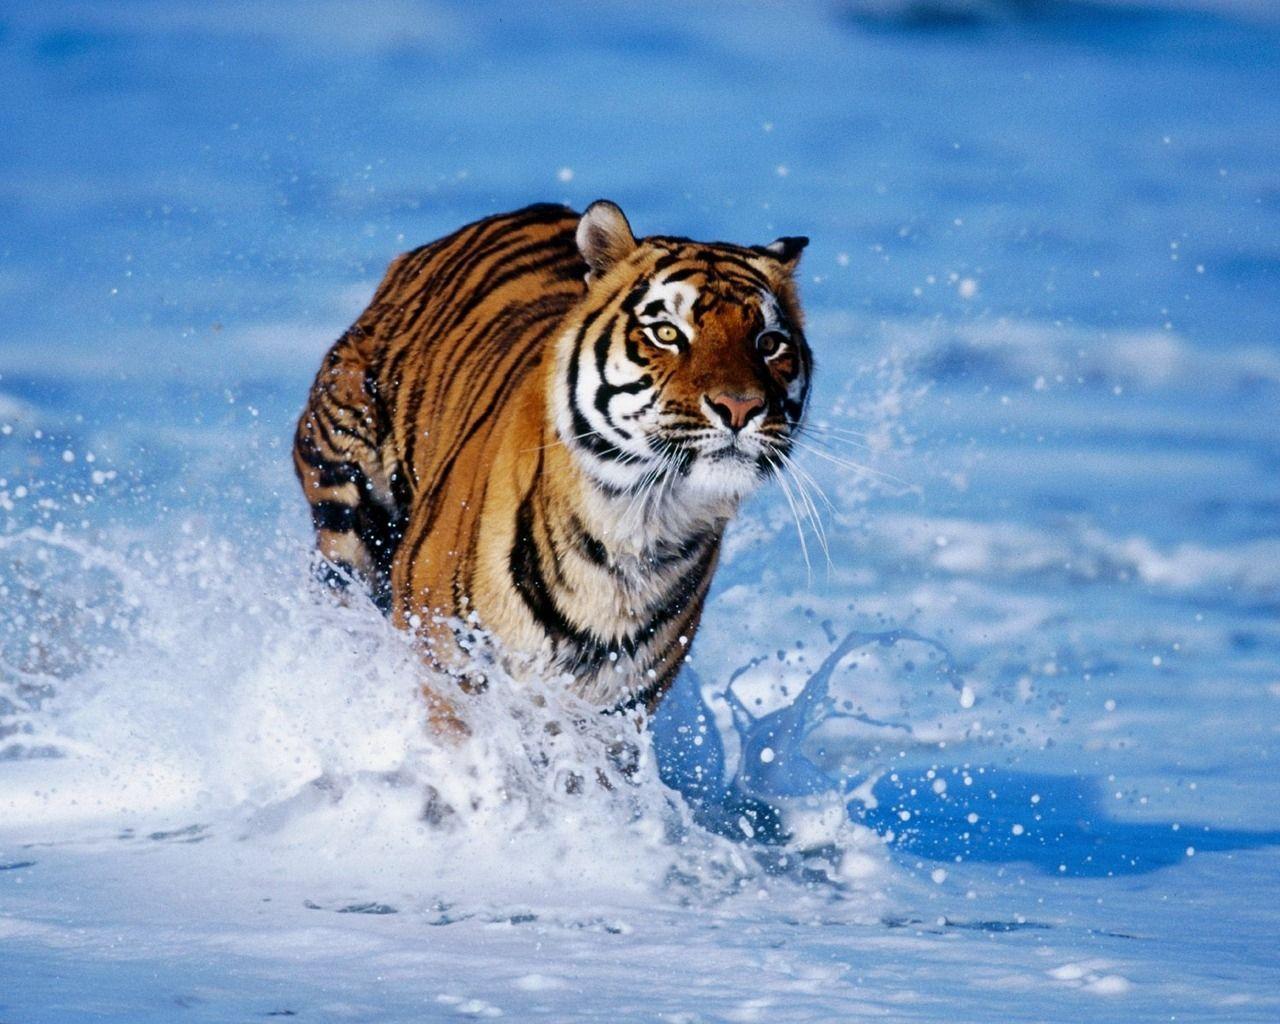 Tiger in the water desktop wallpaper. HD Nature Wallpaper